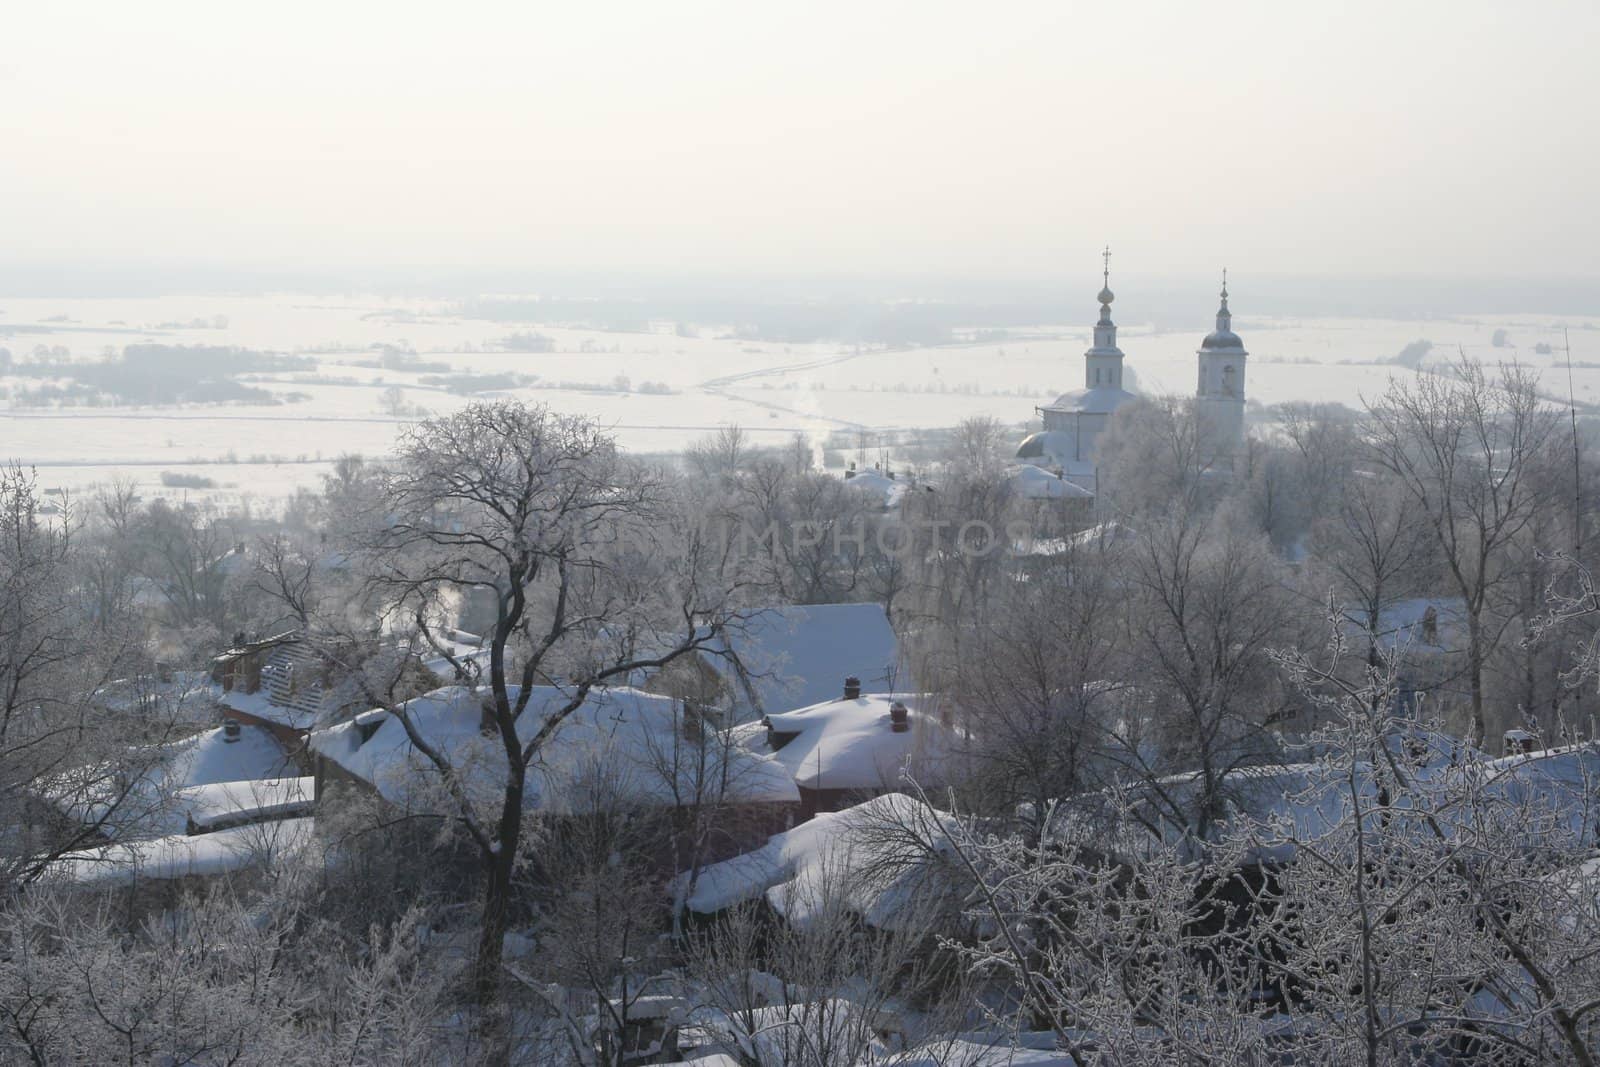 A winter landscape of a little town